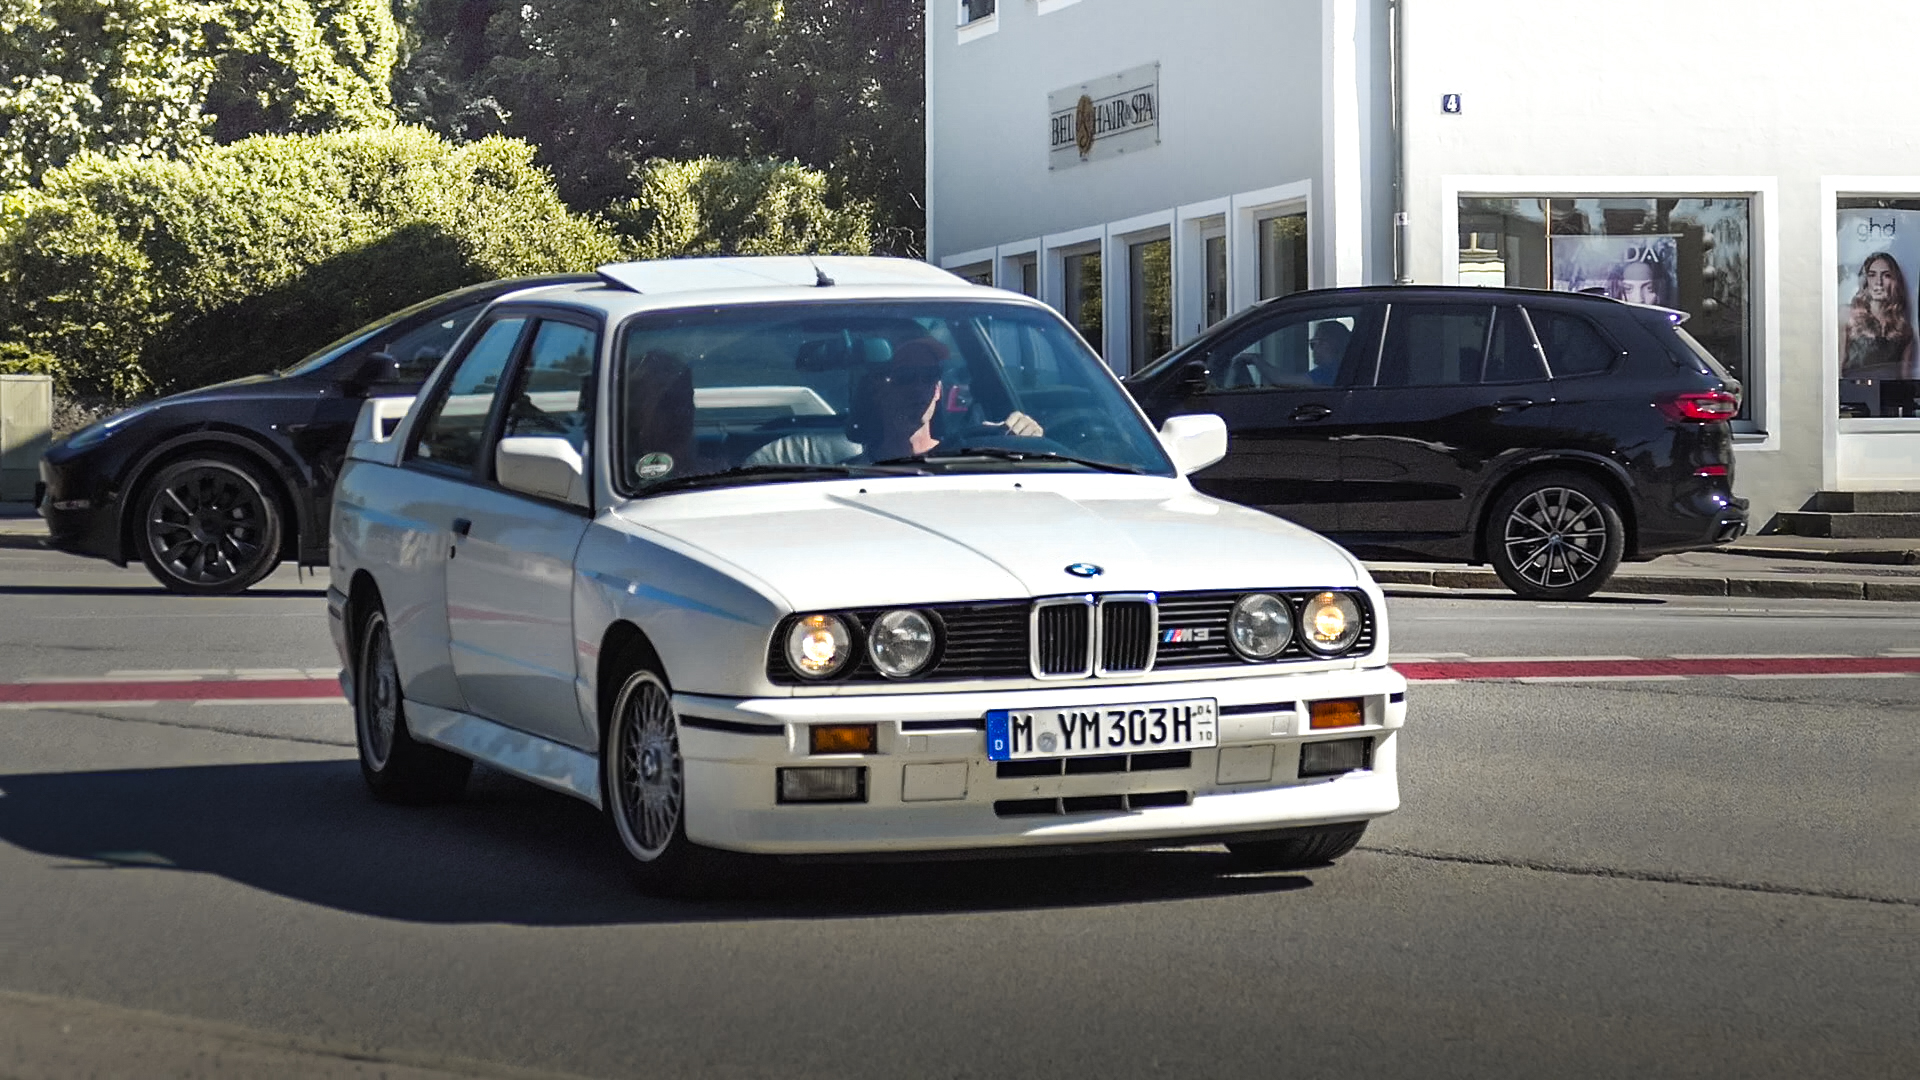 BMW M3 E30 - M-YM303H